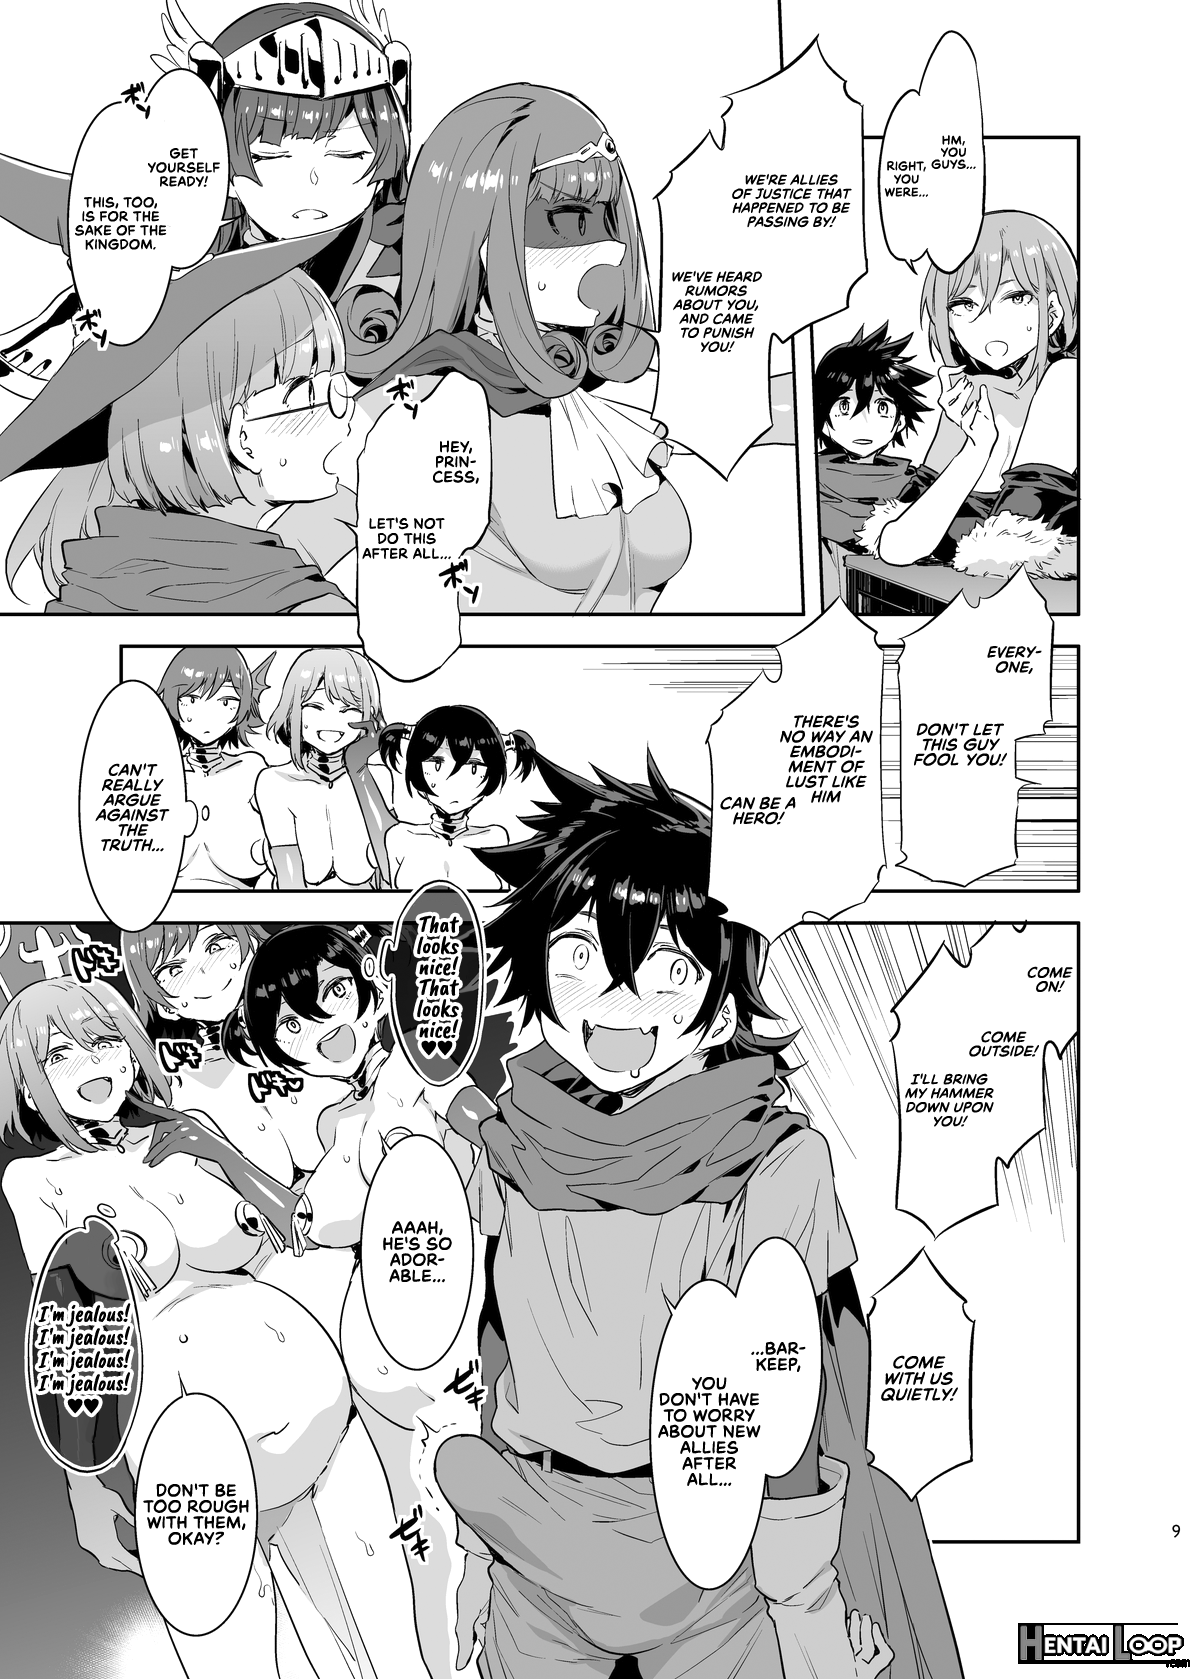 Sexually Over-honest Shota Hero 2 page 10